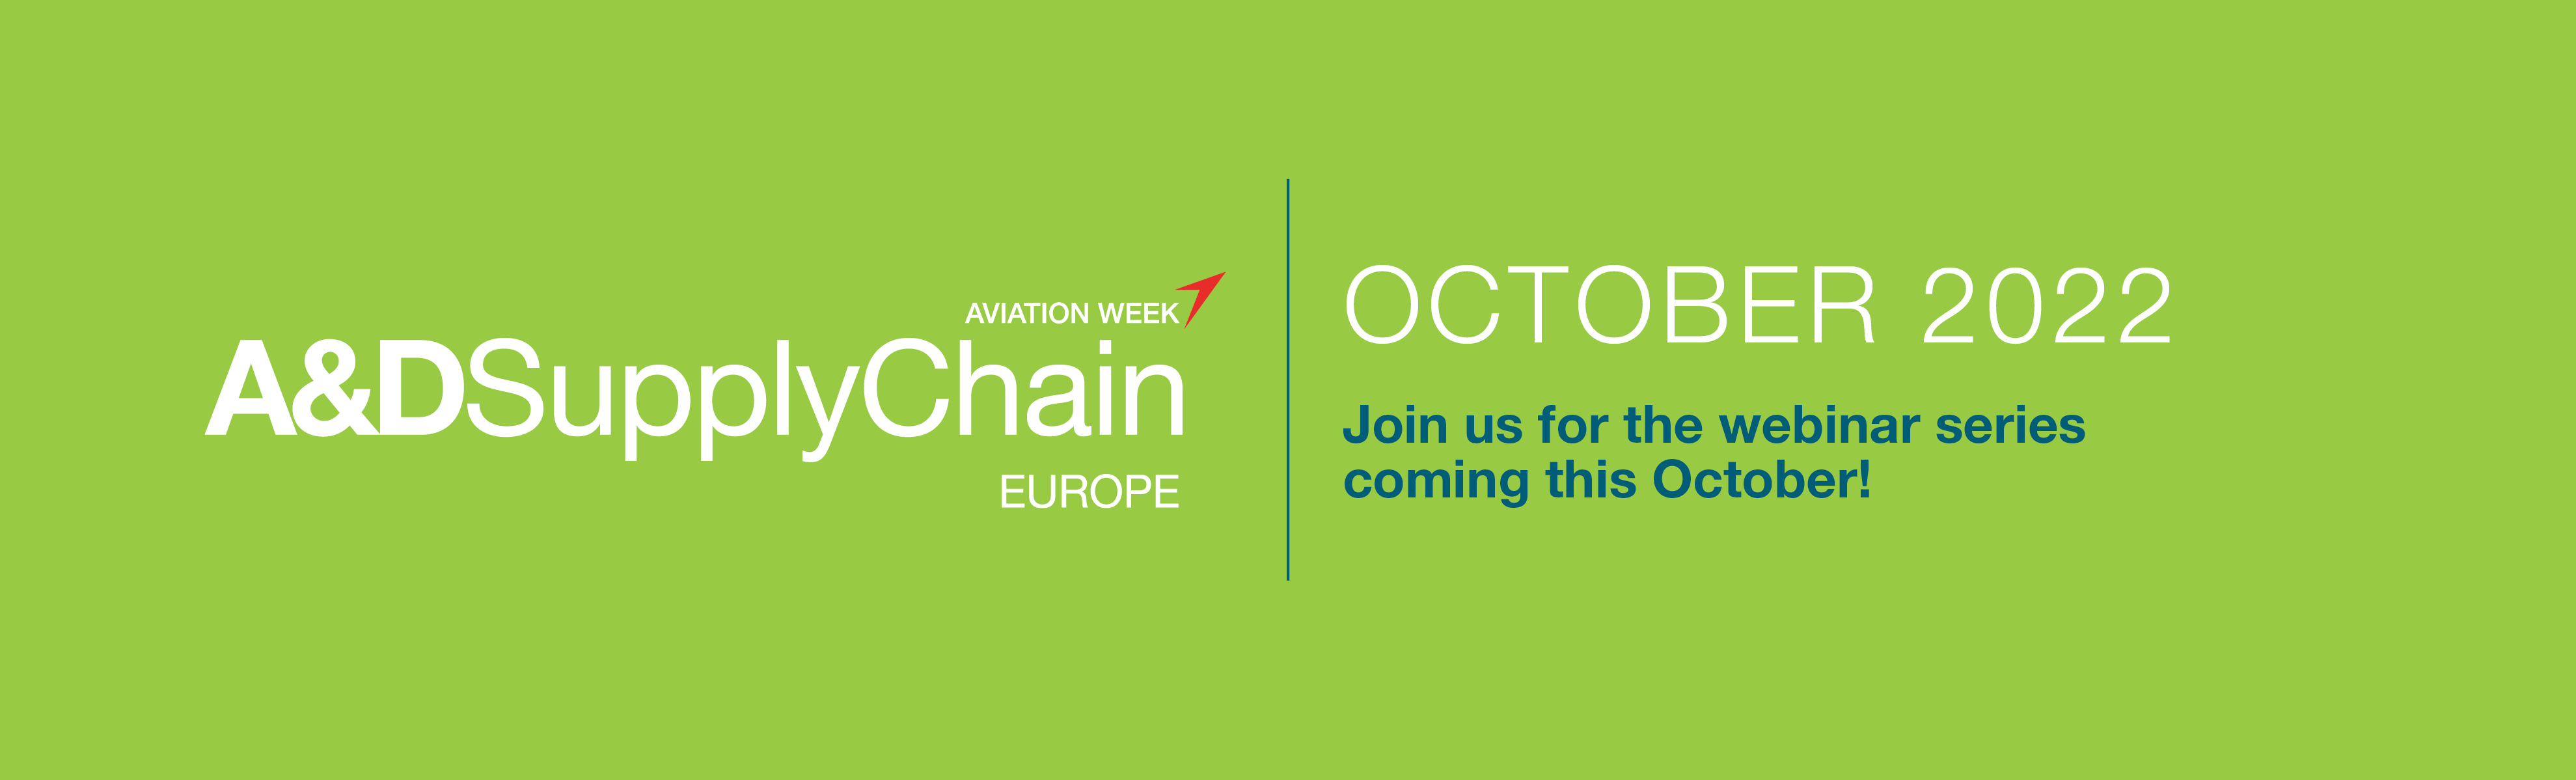 A&D Supply Chain Europe Webinar coming this fall